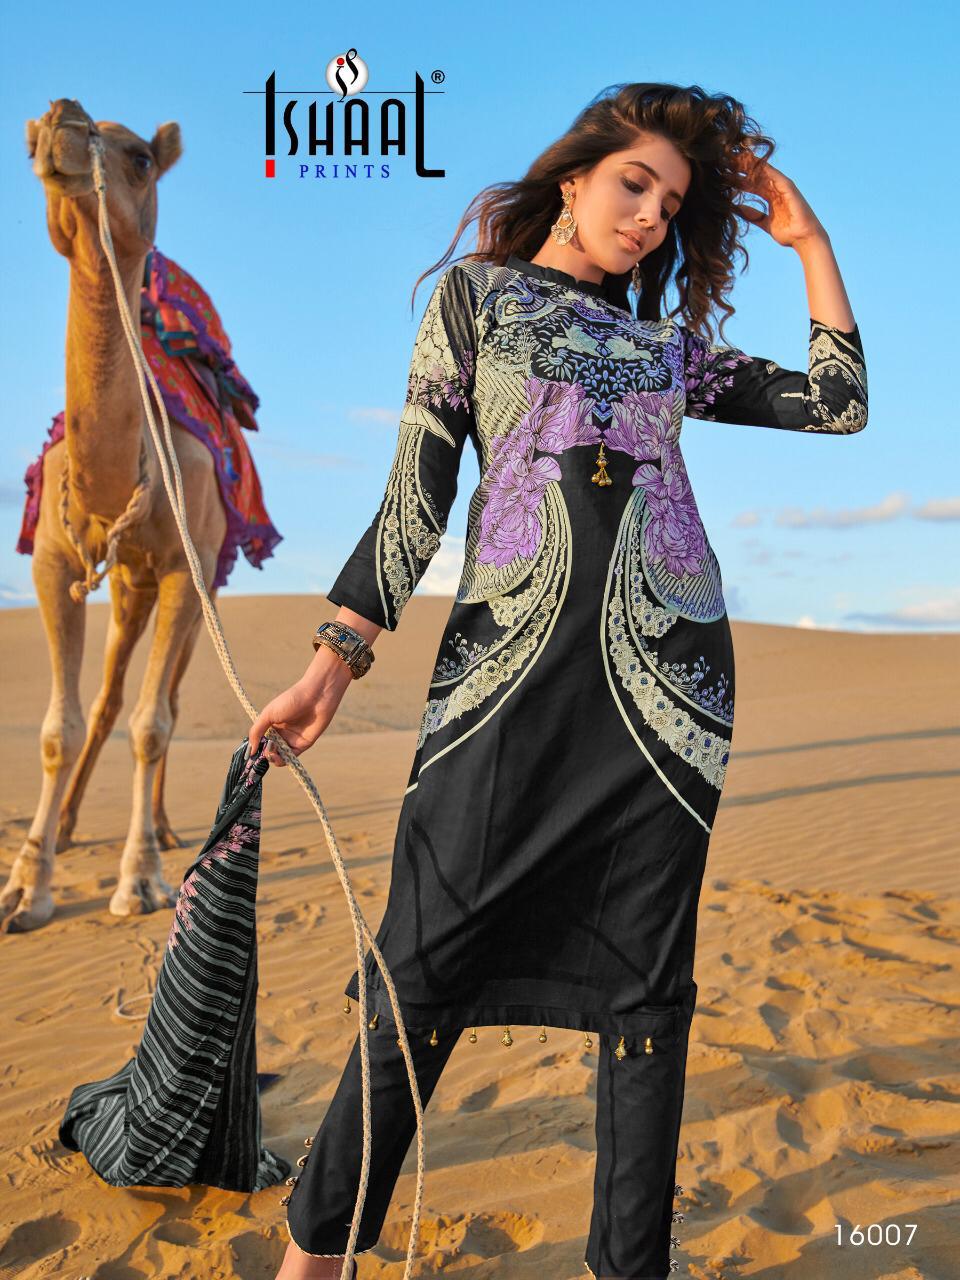 Ishaal Prints Launch Gulmohar Vol 16 Pure Lawn Salwar Suits